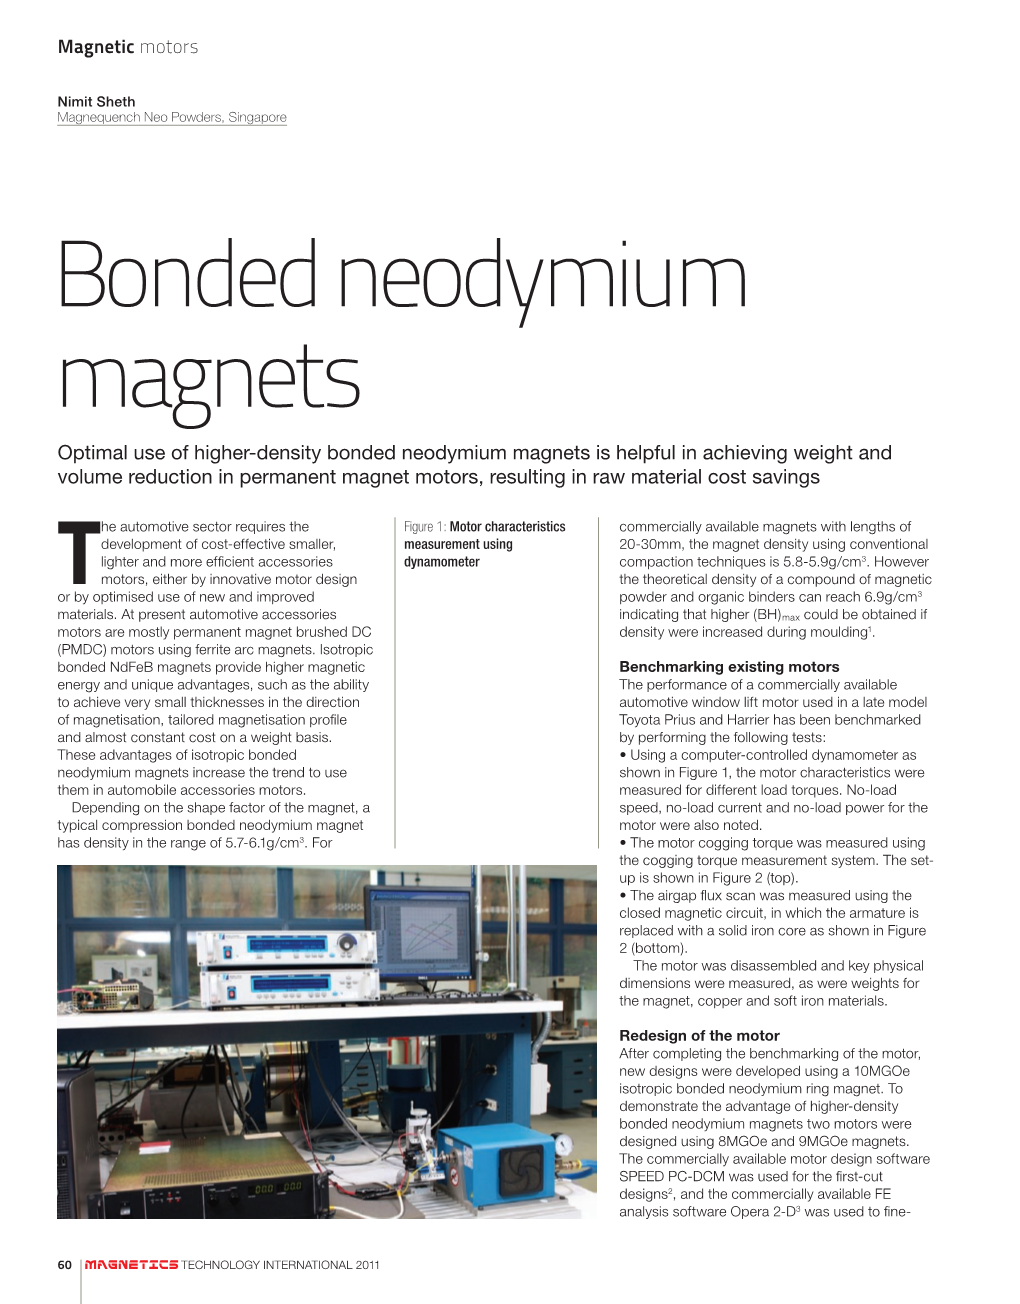 Bonded Neodymium Magnets